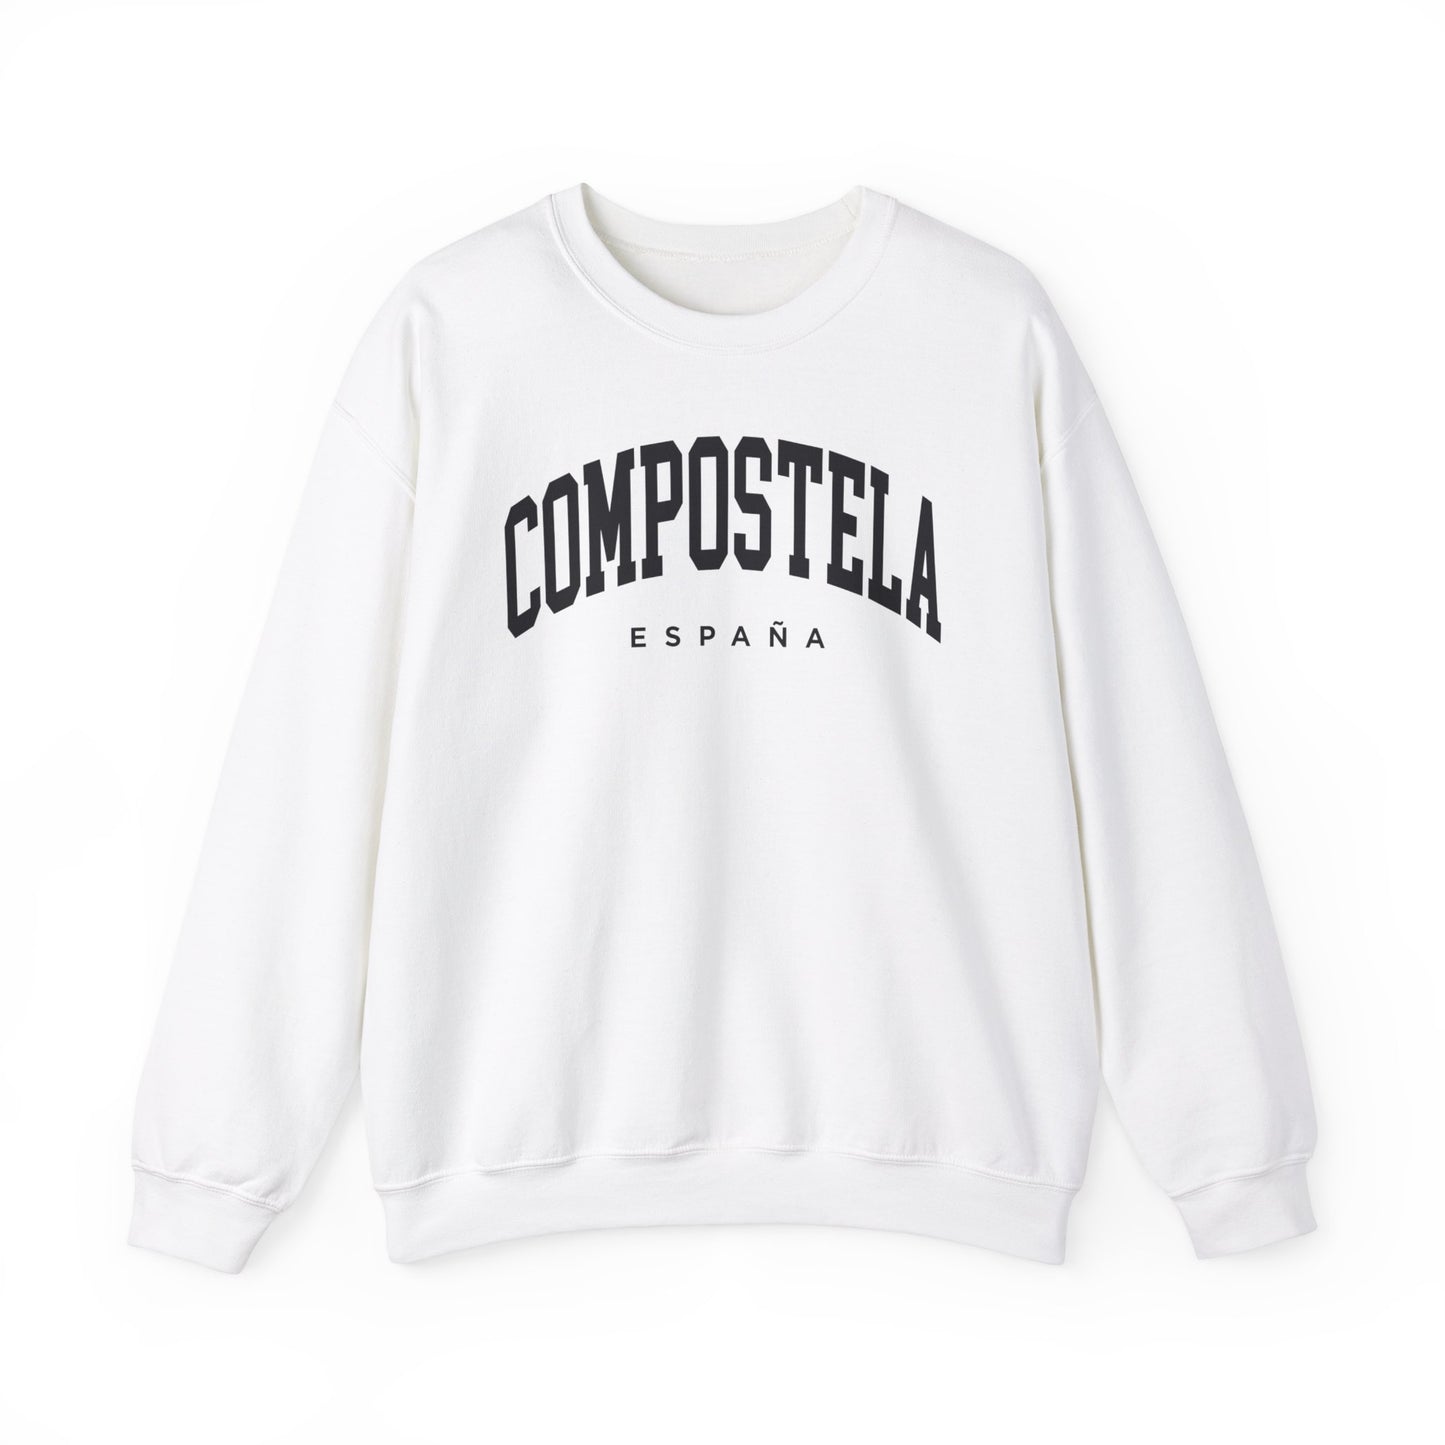 Compostela Spain Sweatshirt